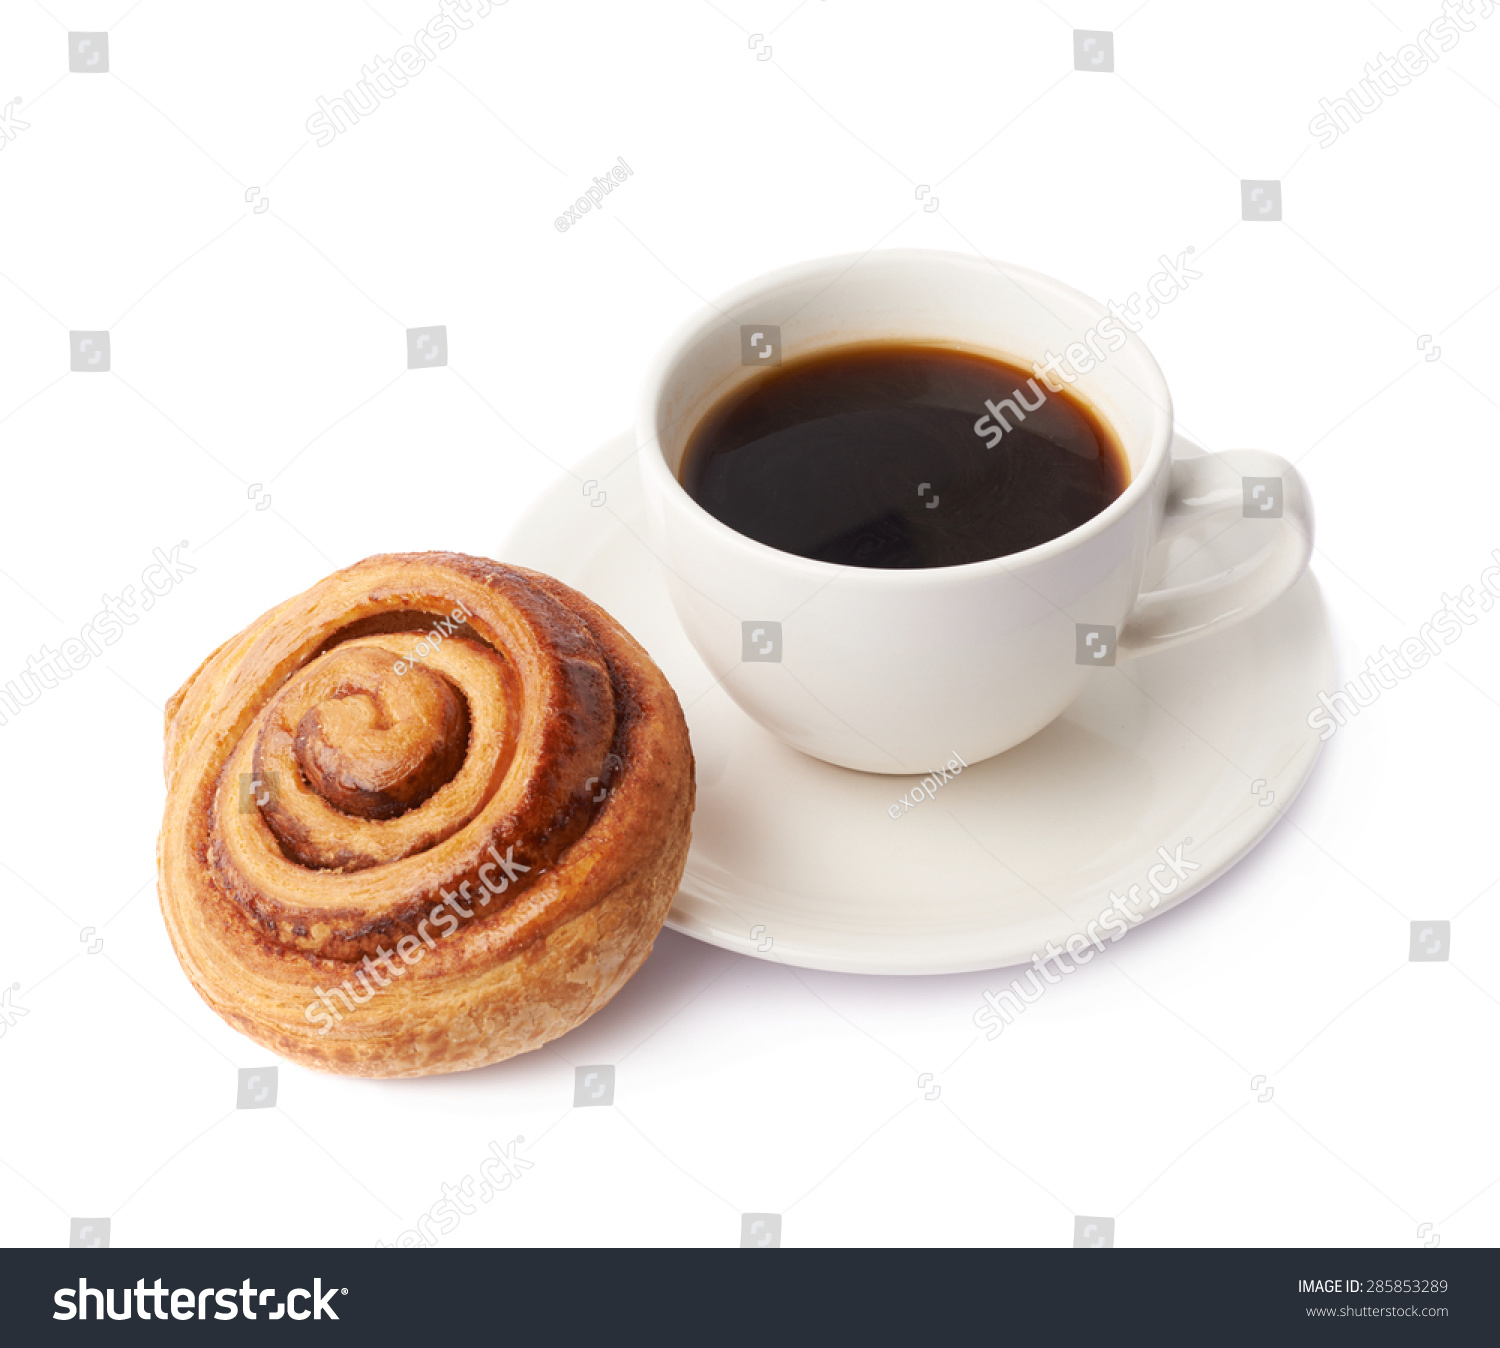 Cup Coffee Cinnamon Roll Bun Pastry Stock Photo 285853289 - Shutterstock